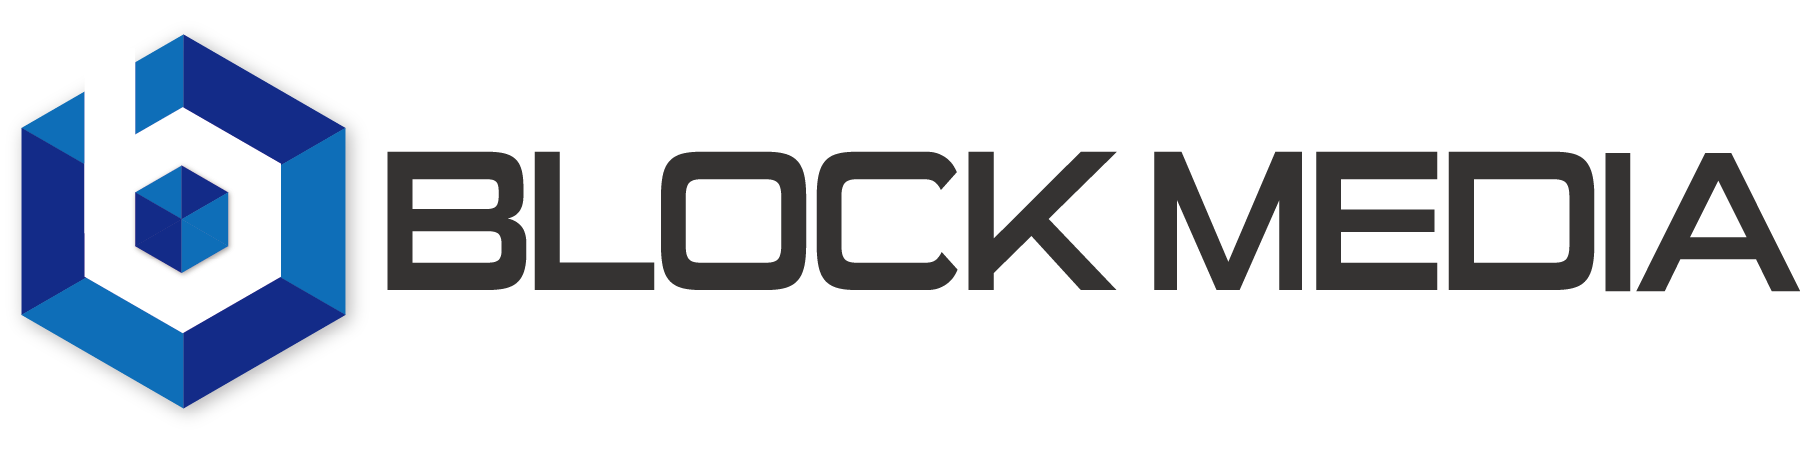 blockmedia-logo